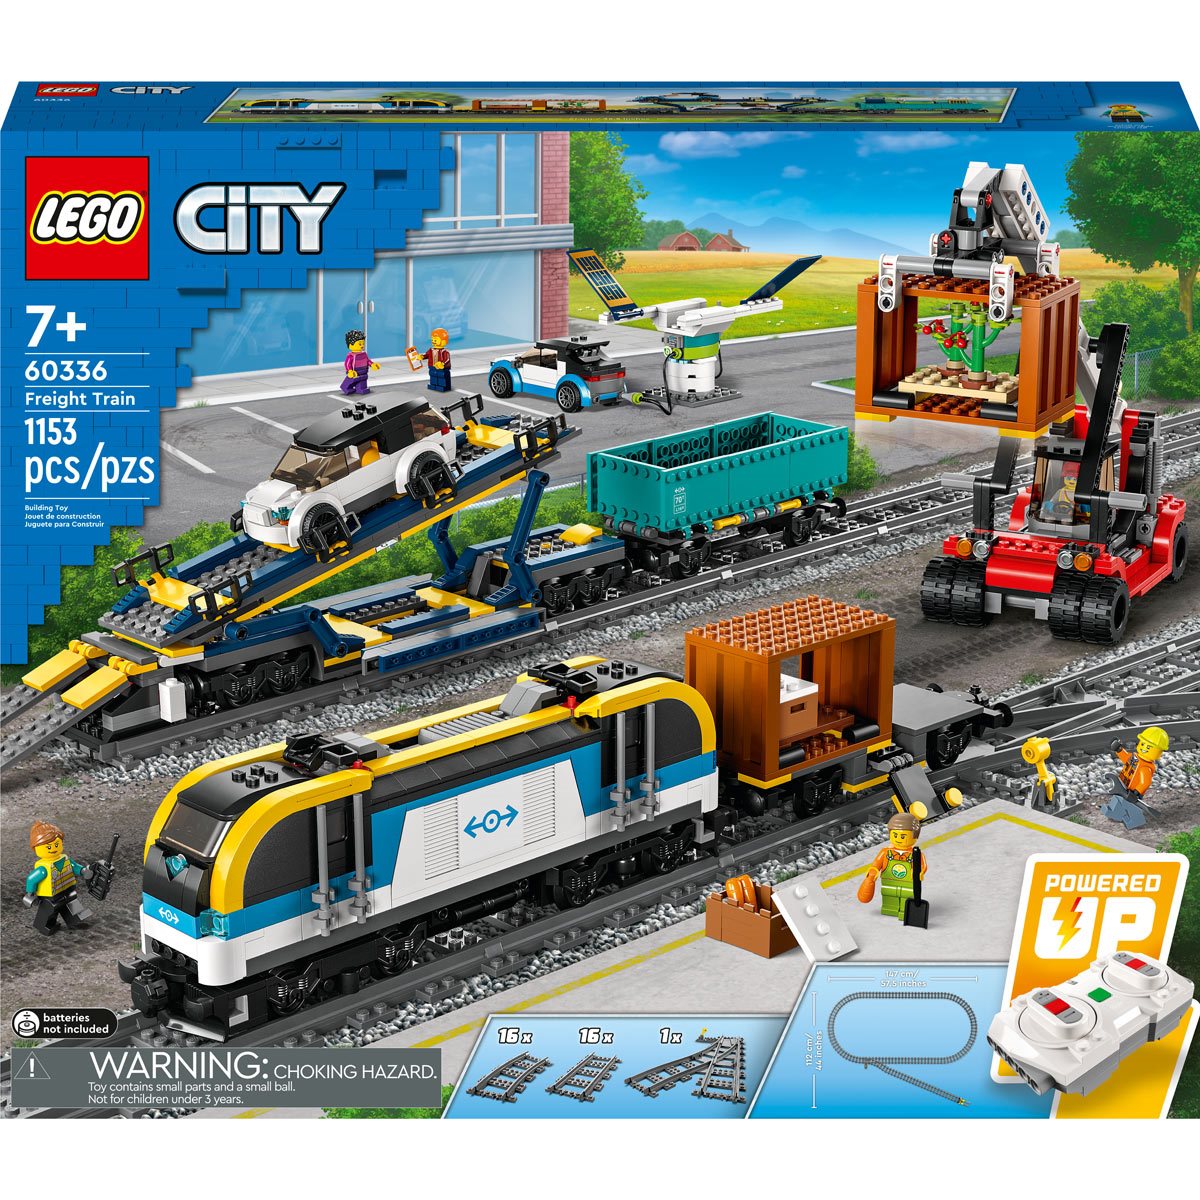 erosie lastig natuurkundige LEGO 60336 City Freight Train - Entertainment Earth